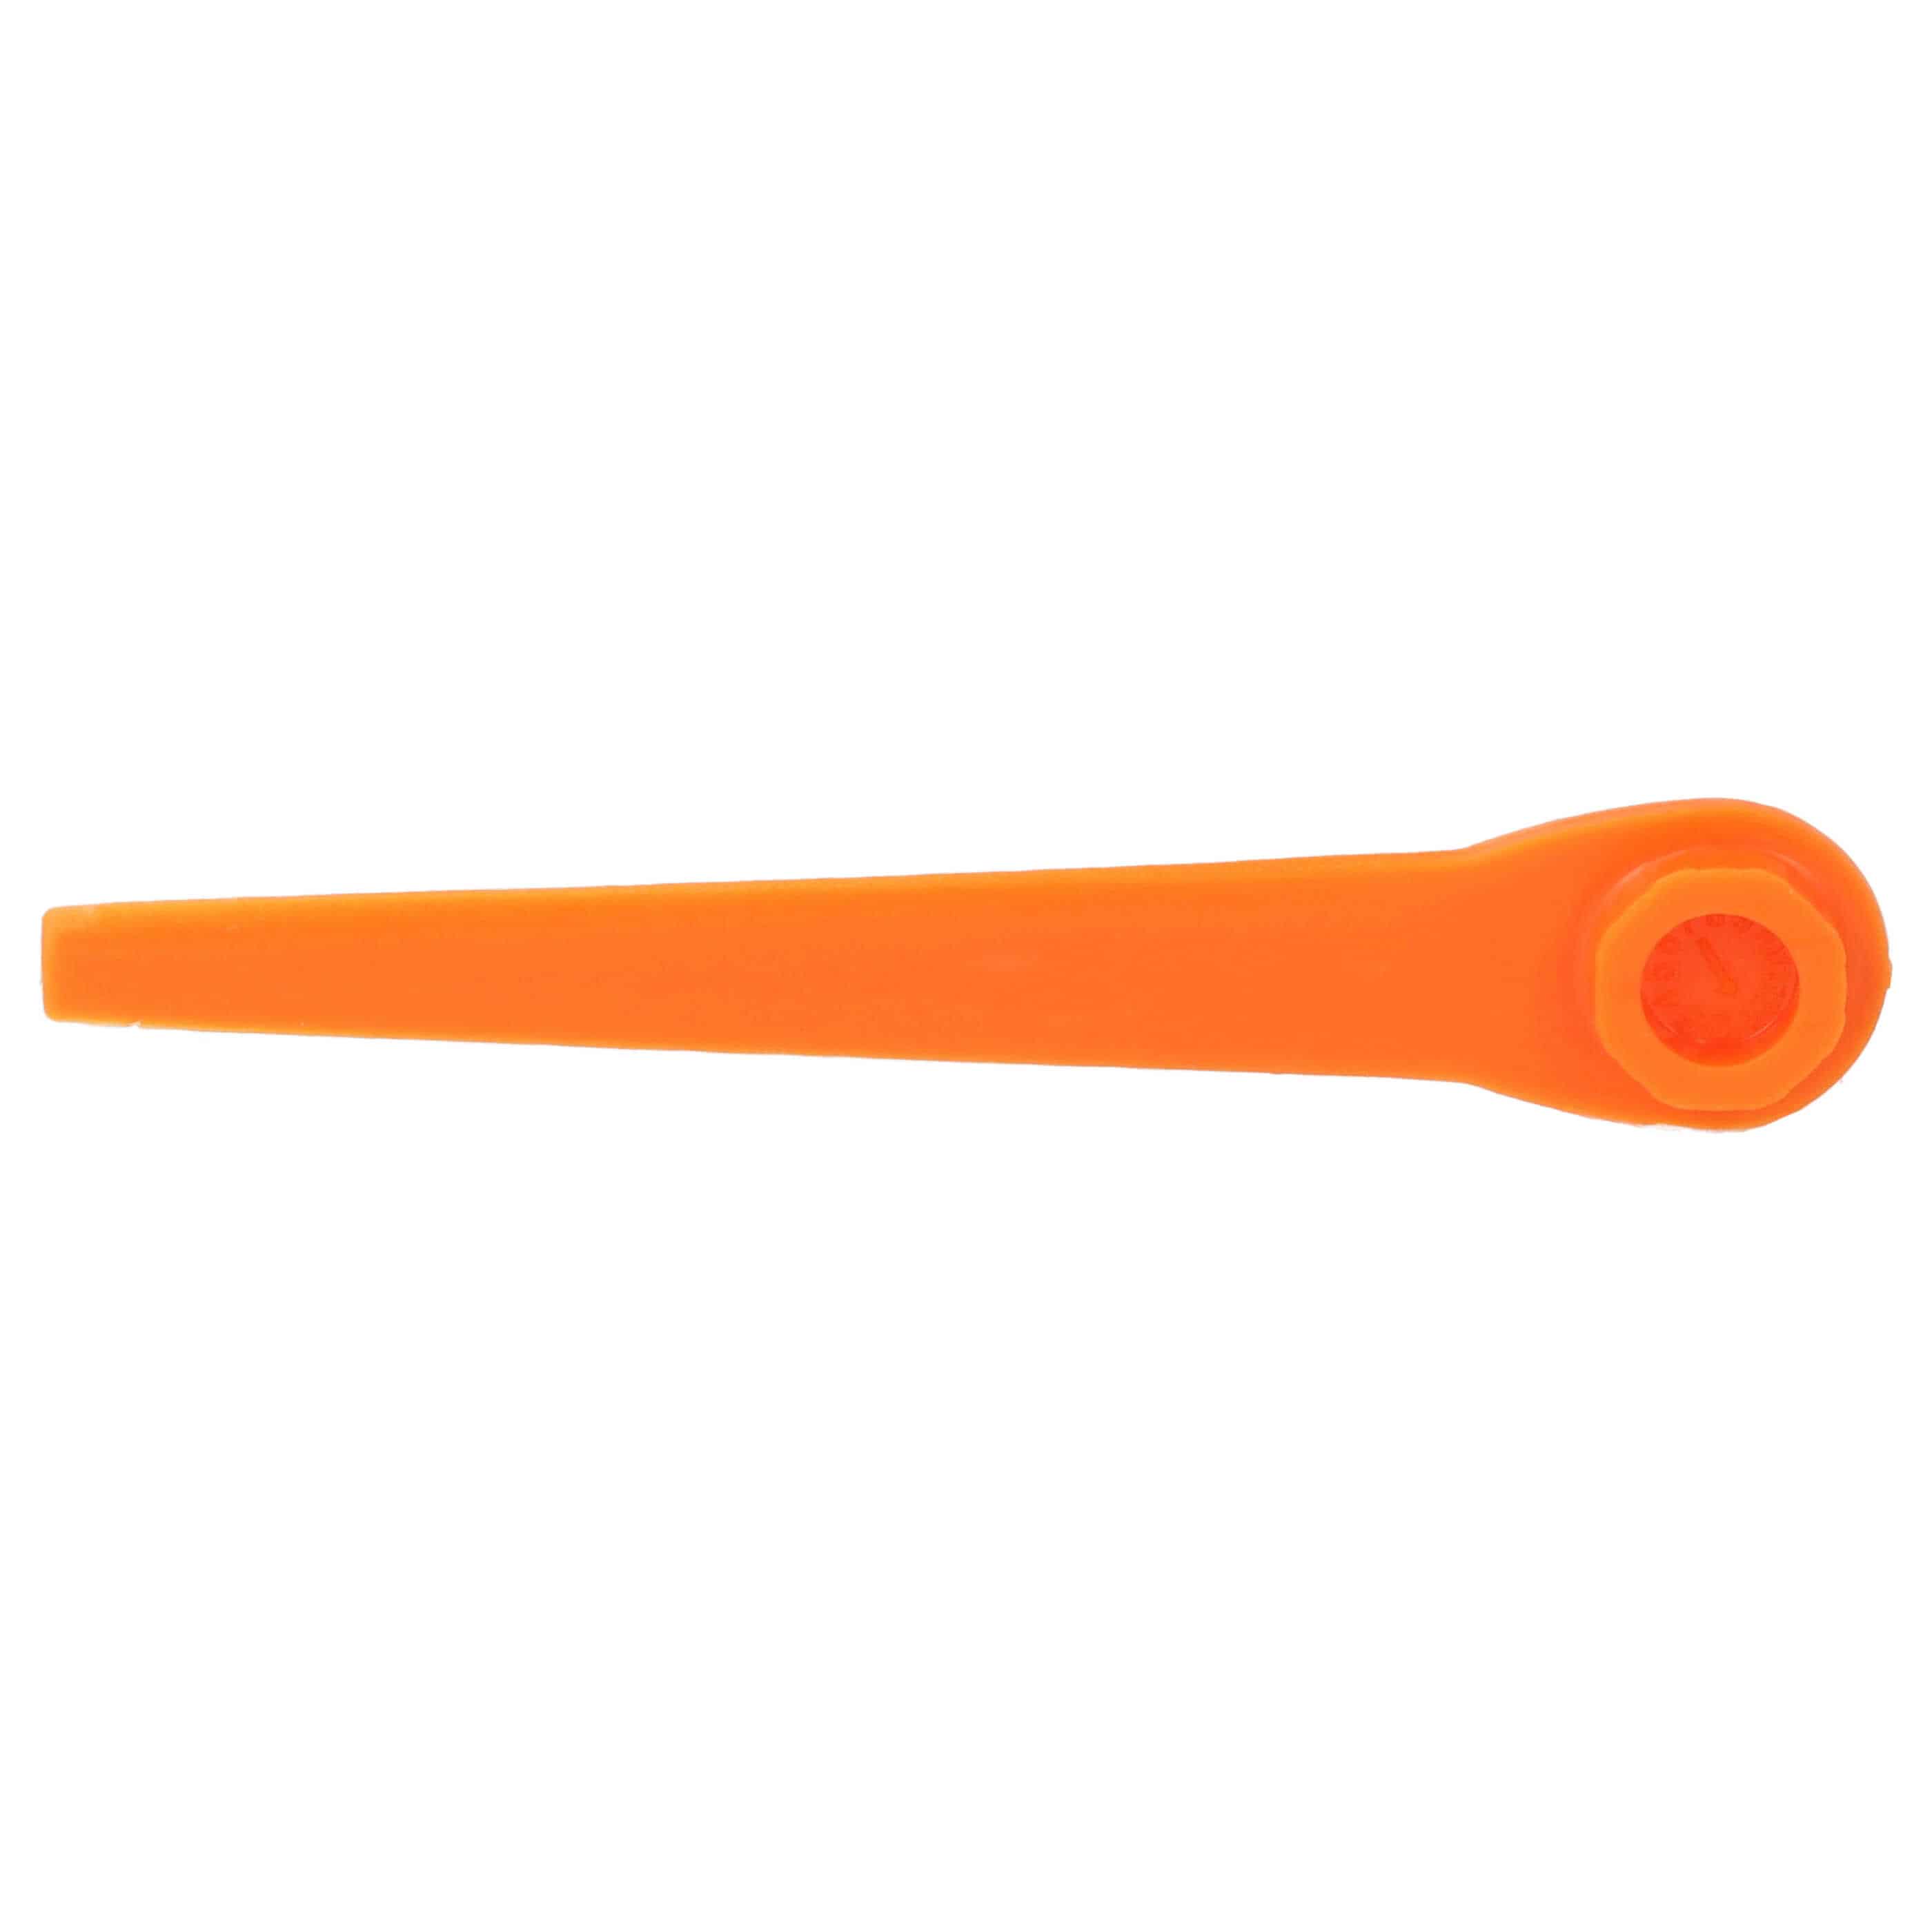 10x Exchange Blade replaces Gardena RotorCut 5368-20 for Cordless Strimmer - plastic, orange